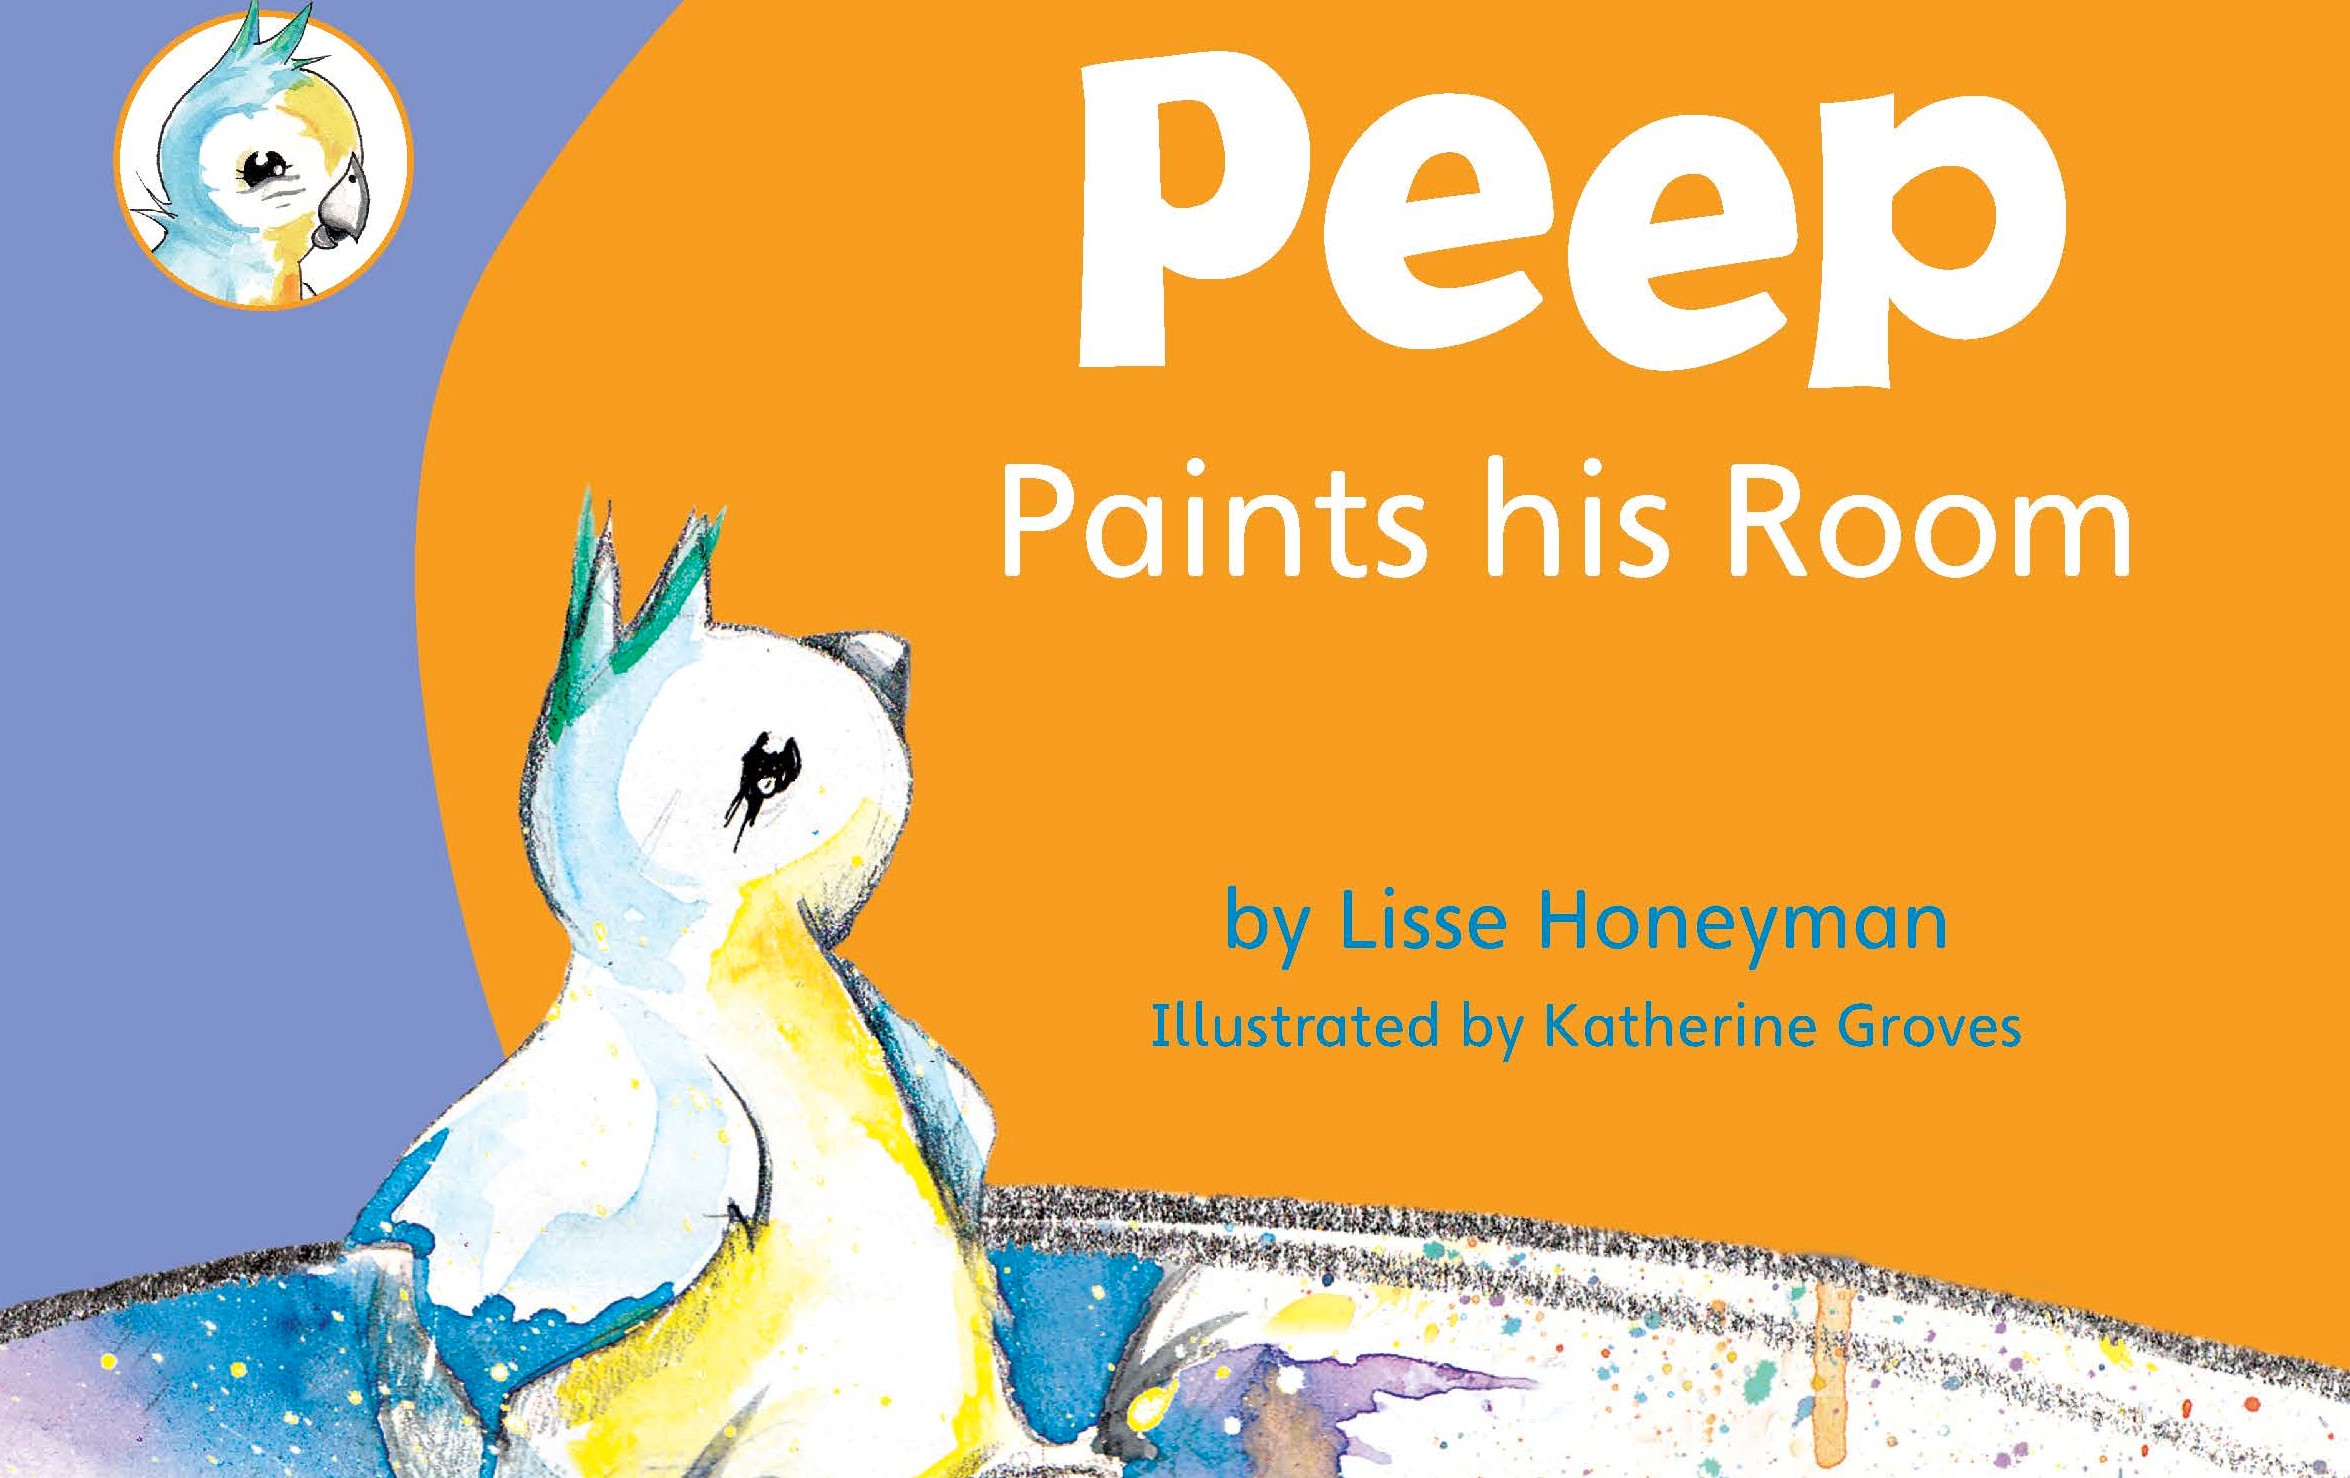 peep paints his room